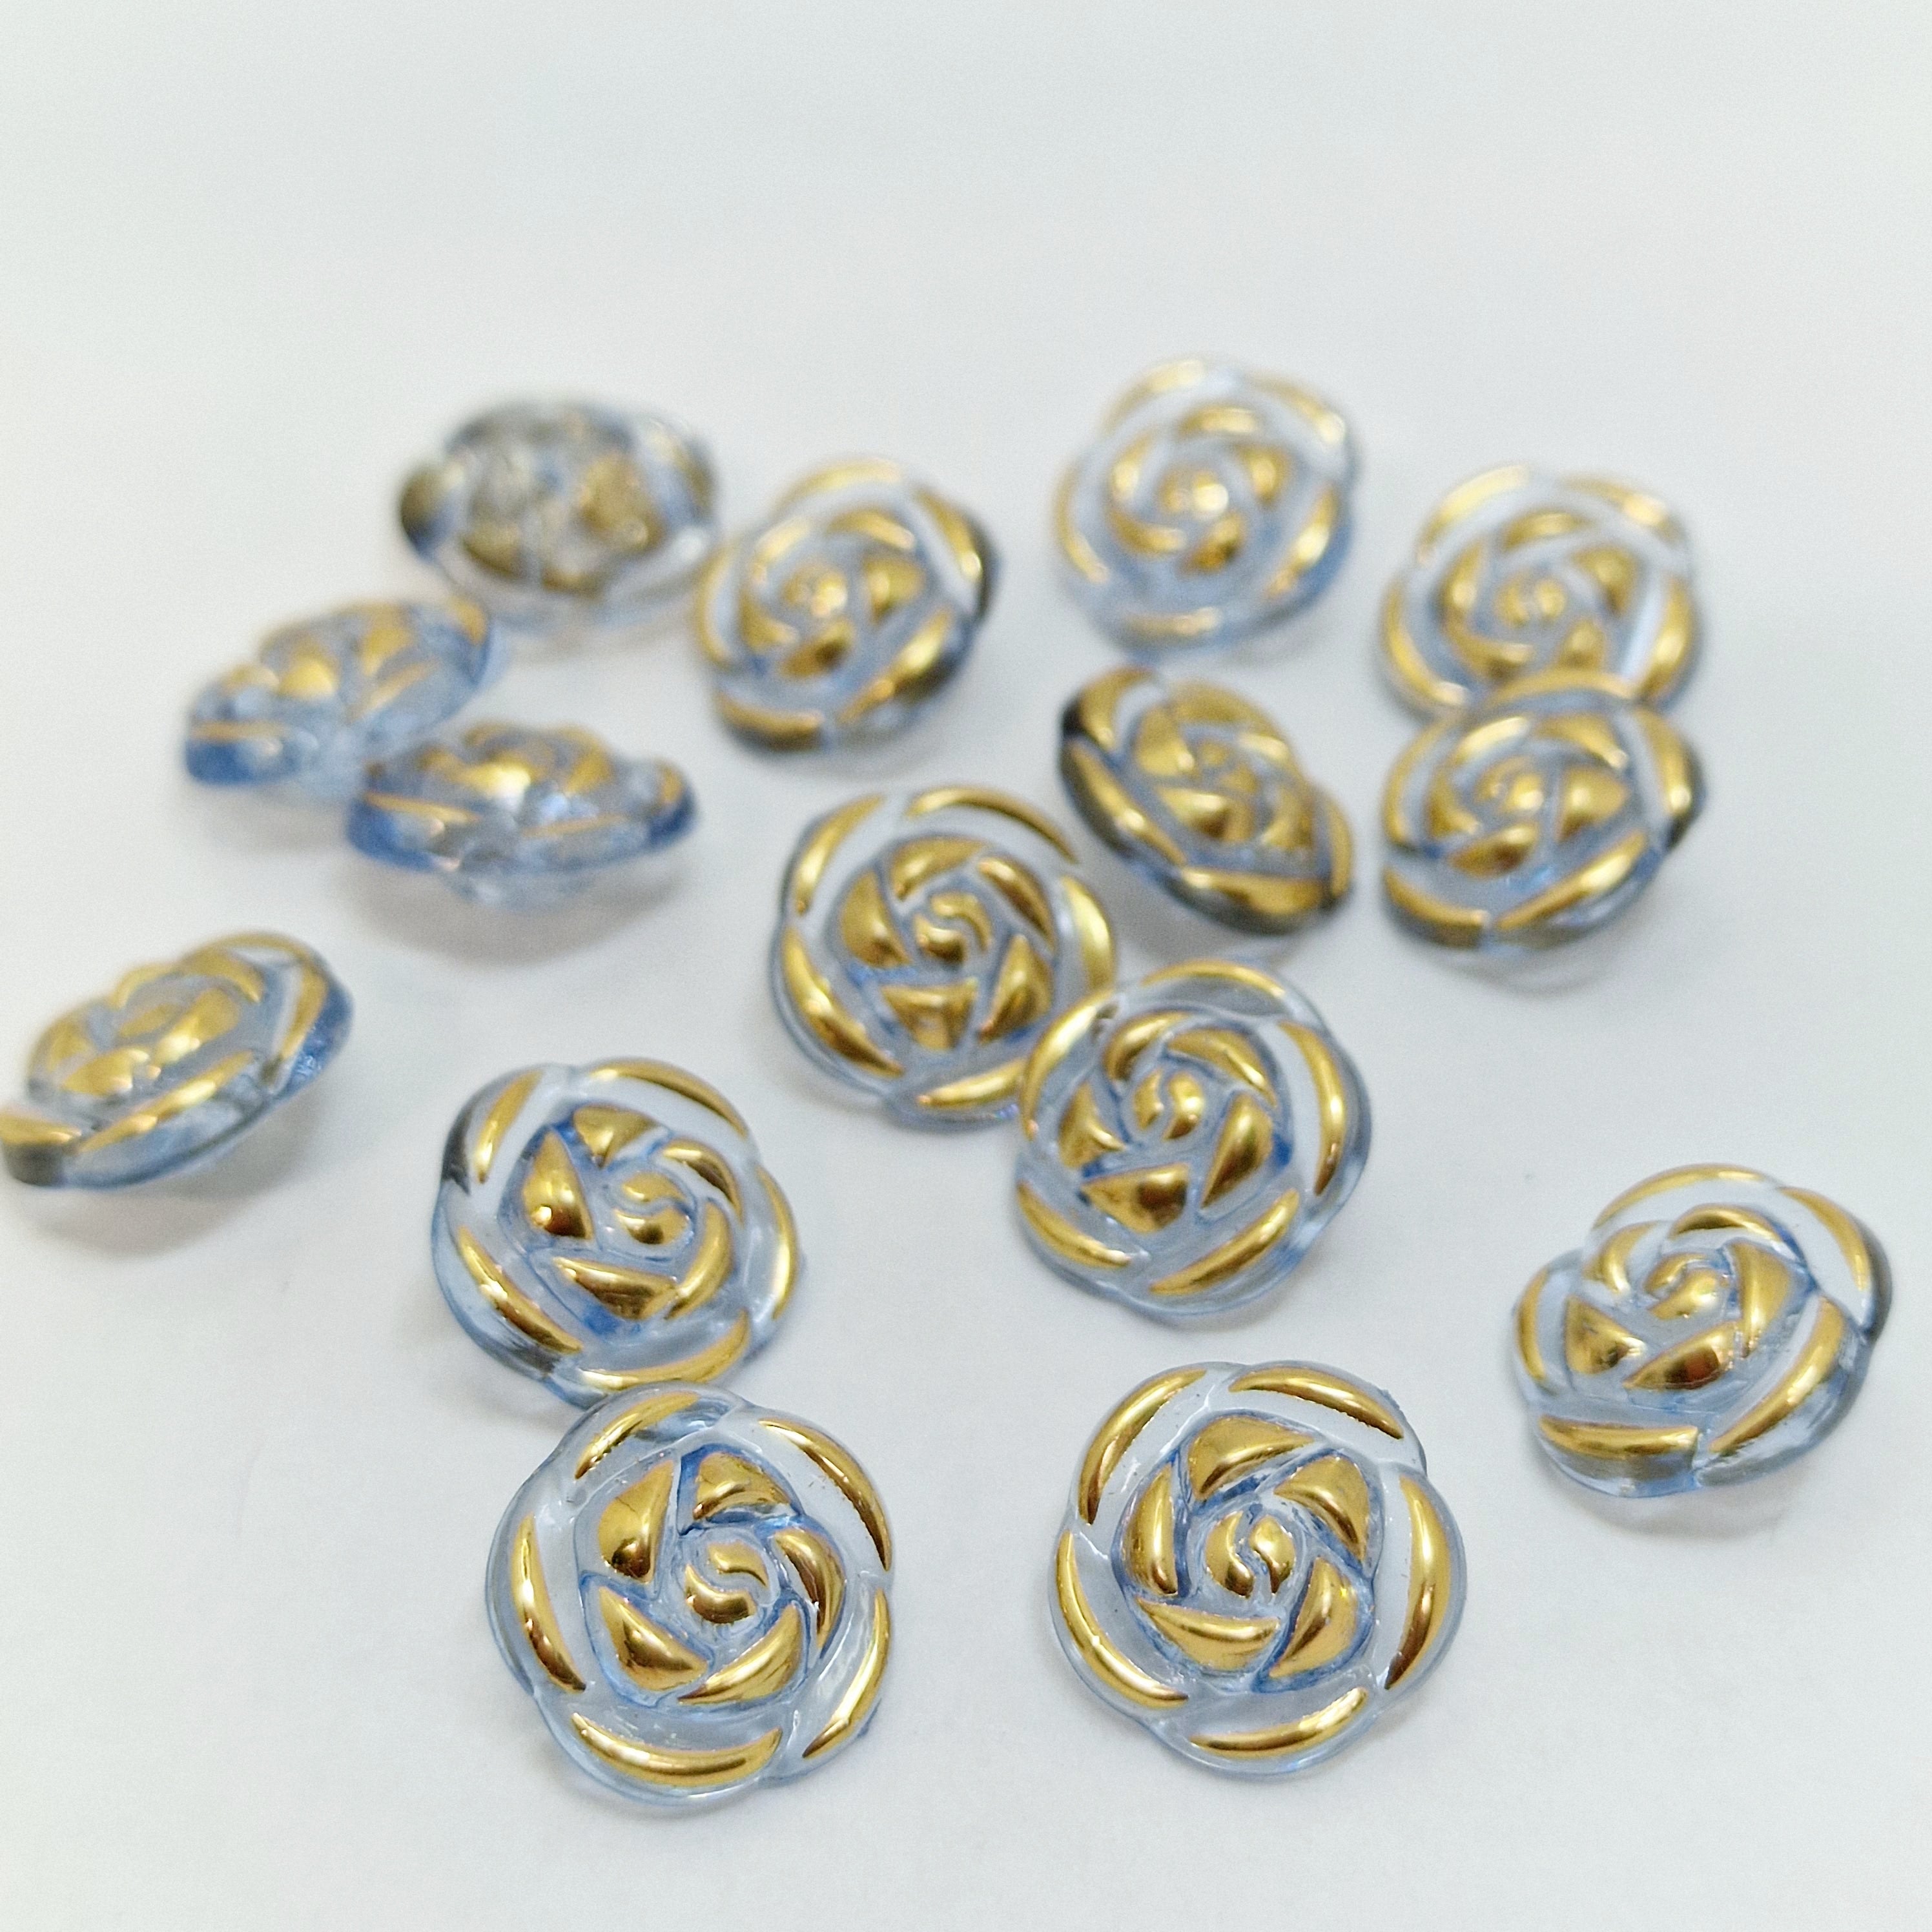 MajorCrafts 40pcs 13mm Light Blue & Gold Rose Flower Shank Resin Buttons